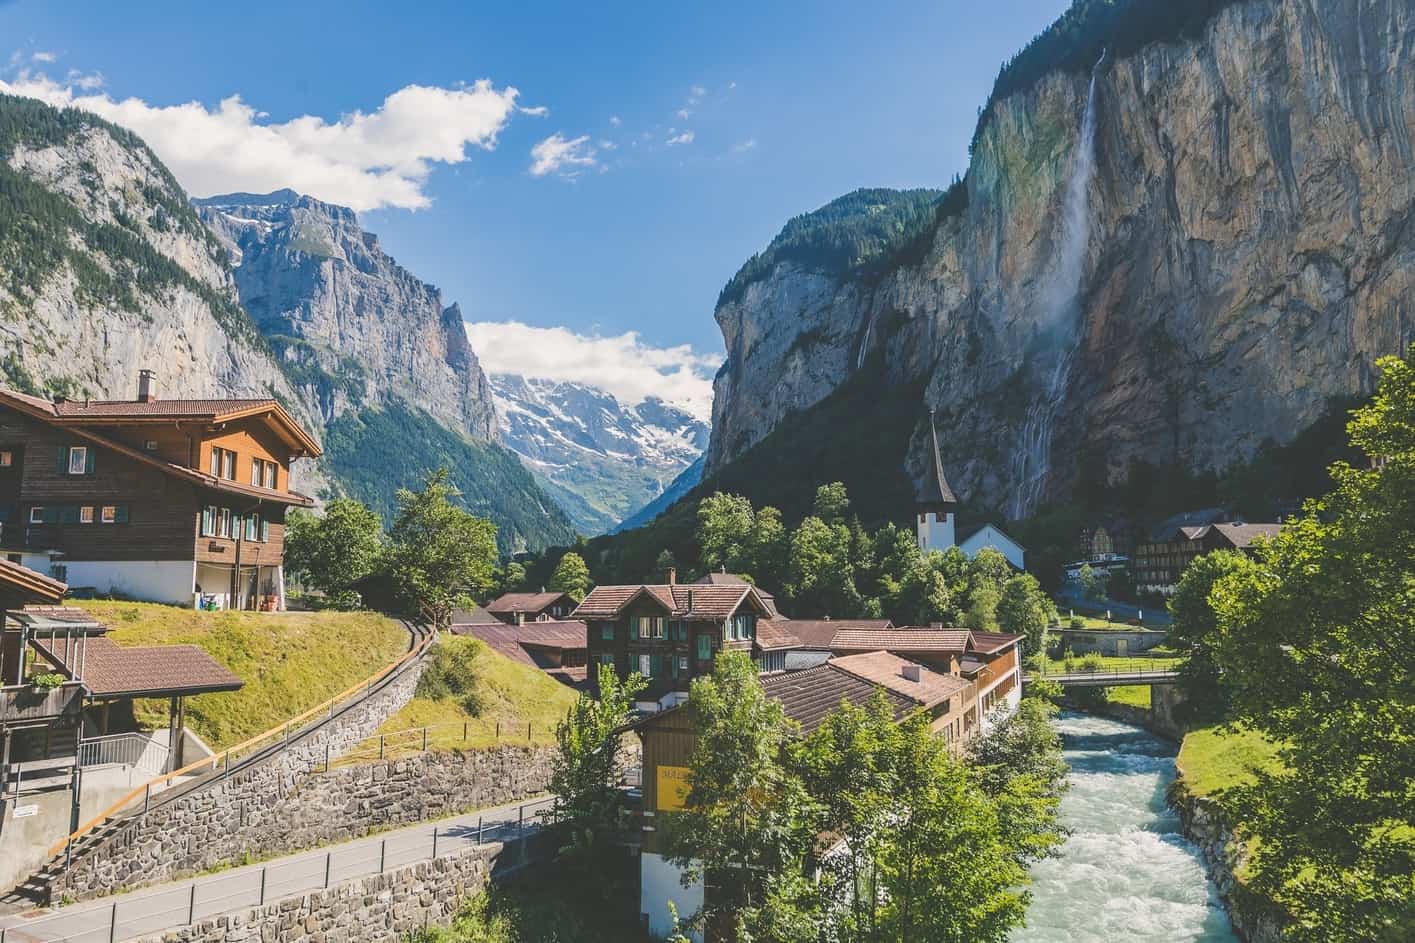 Lauterbrunnen, Switzerland open for tourism